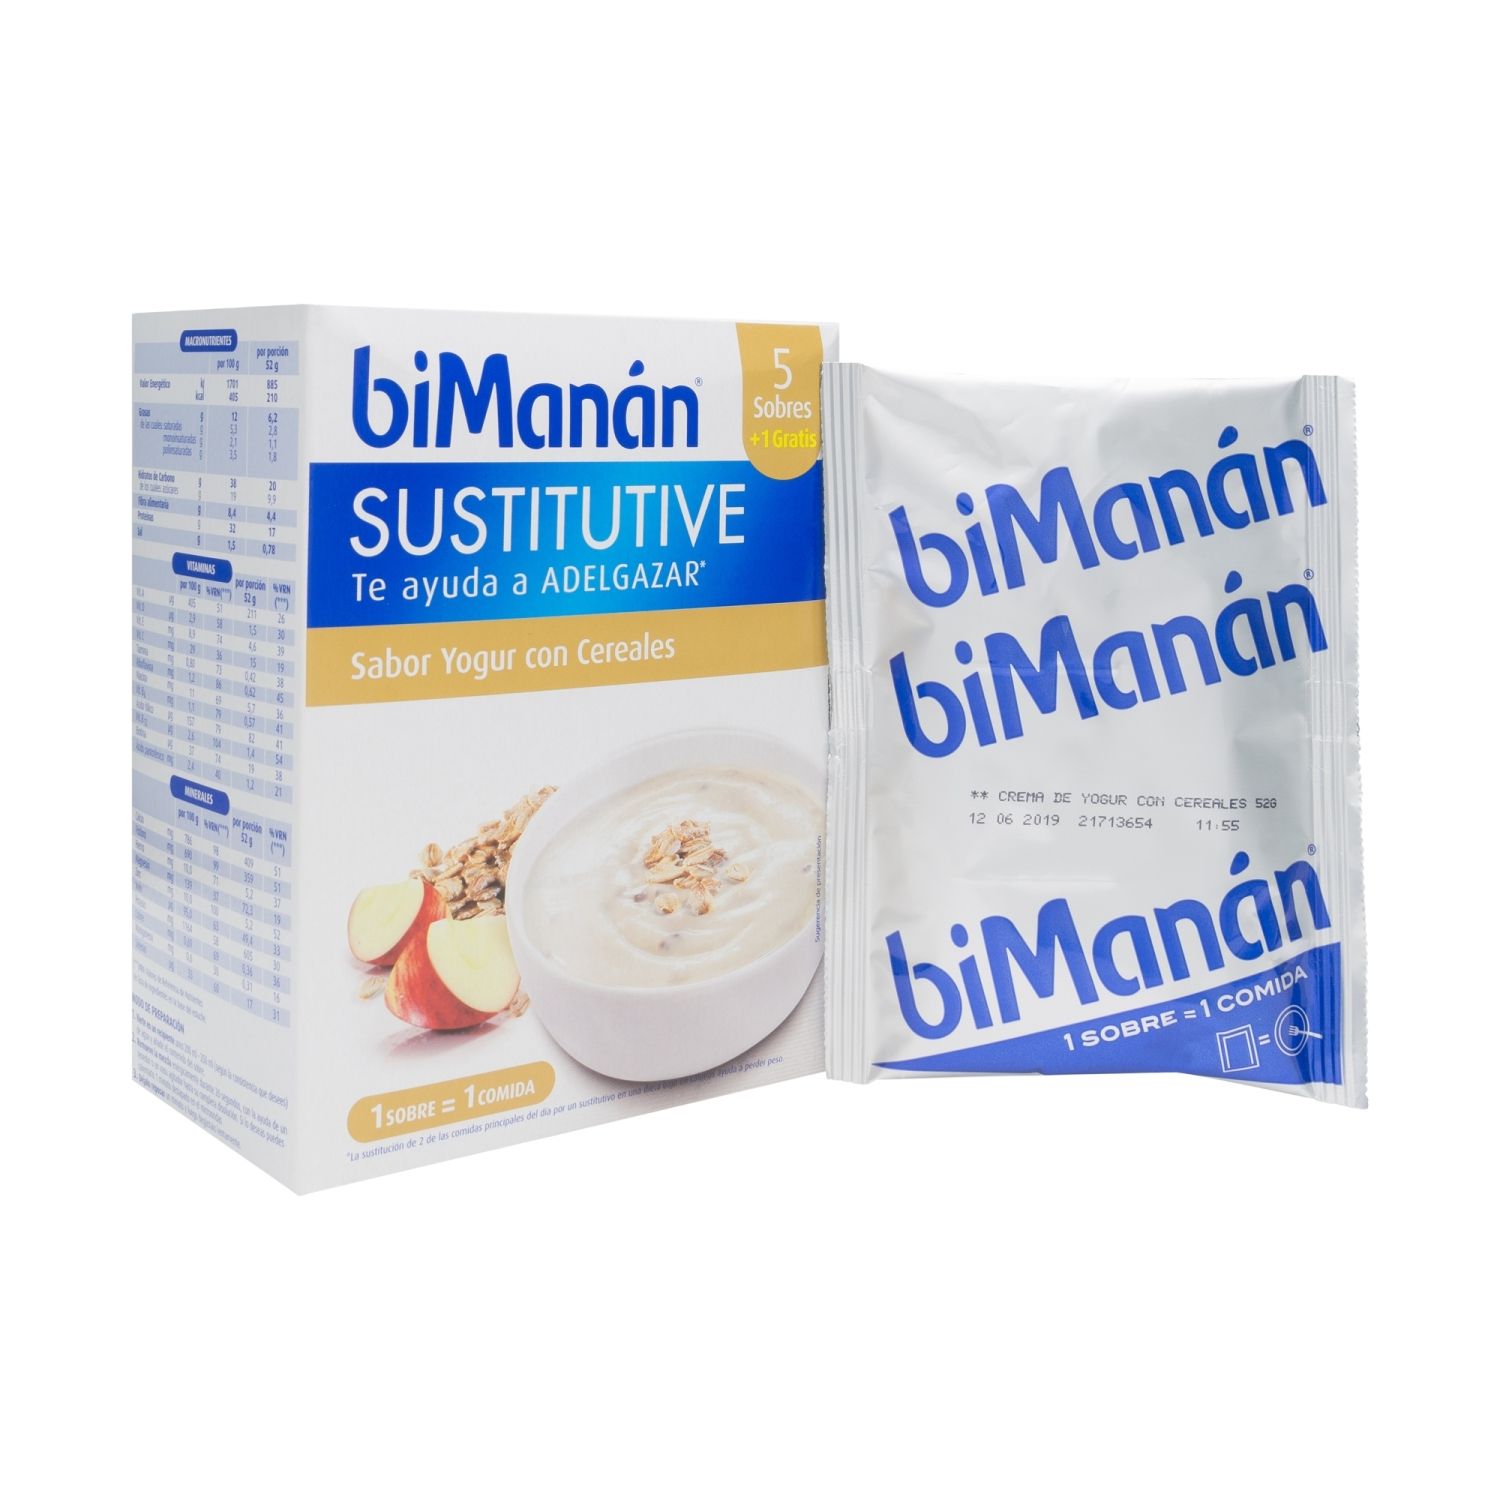 biman n sustitutive yogur cereales 6 sobres